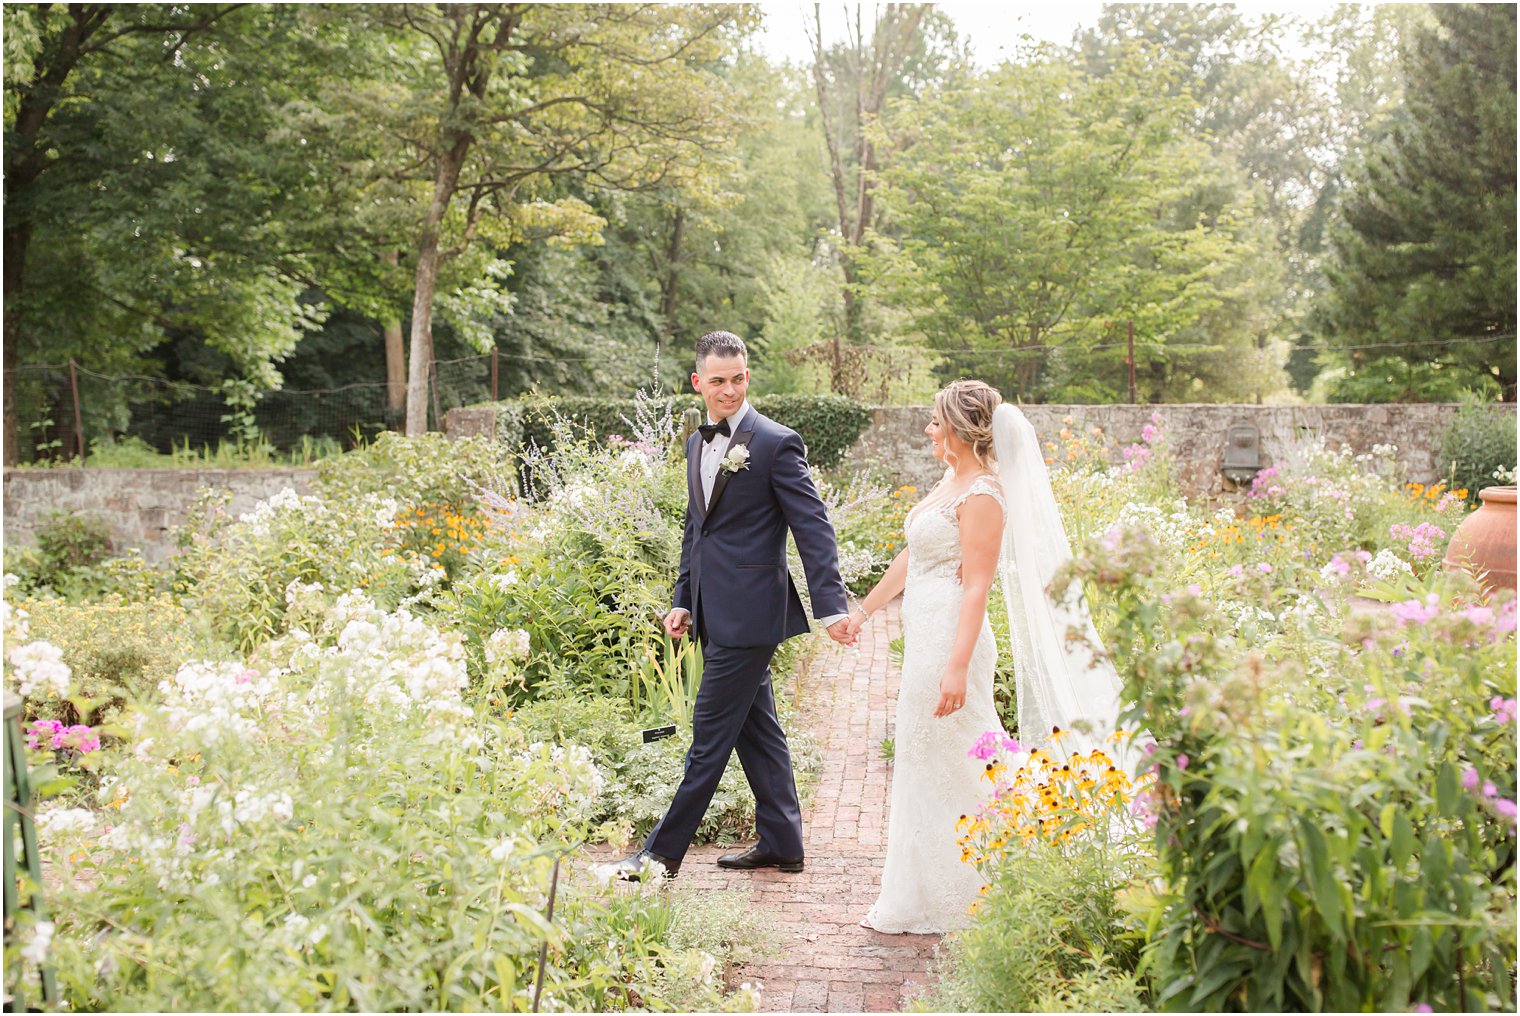 Romantic bride and groom photos at Cross Estate Gardens